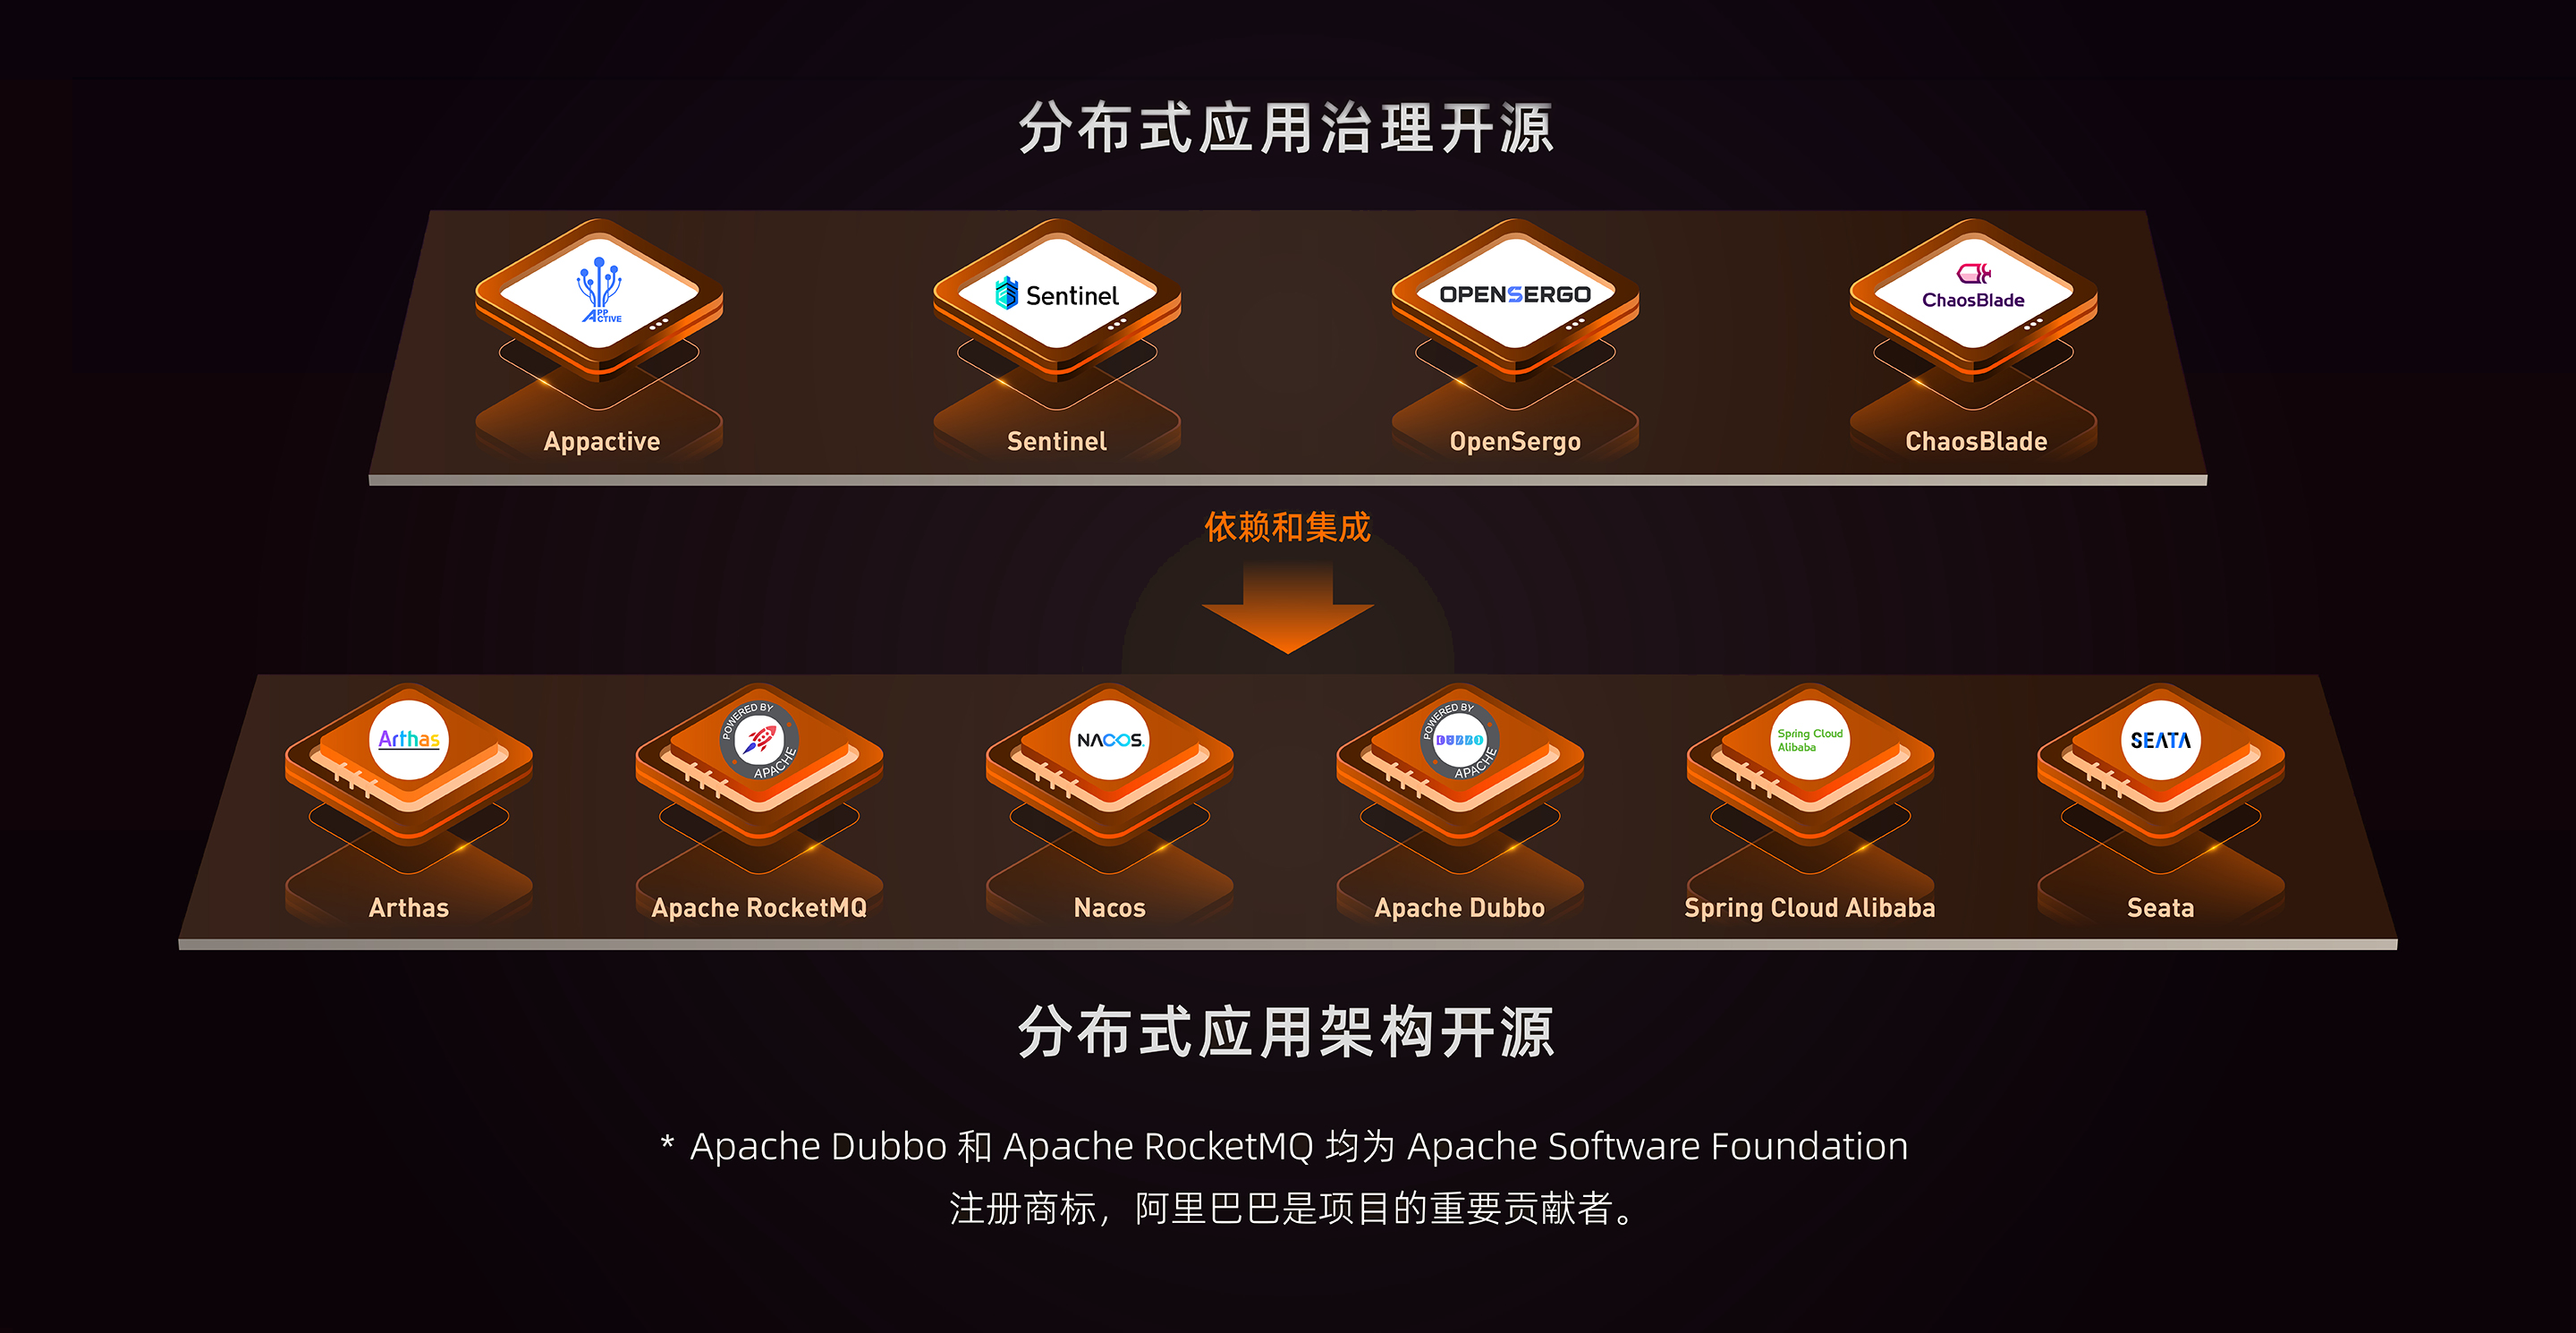 【Alibaba微服务技术系列】「SpringCloud技术专题」基于SpringCloud-Alibaba的微服务2.0模式架构搭建实战指南（解析版本对应关系）